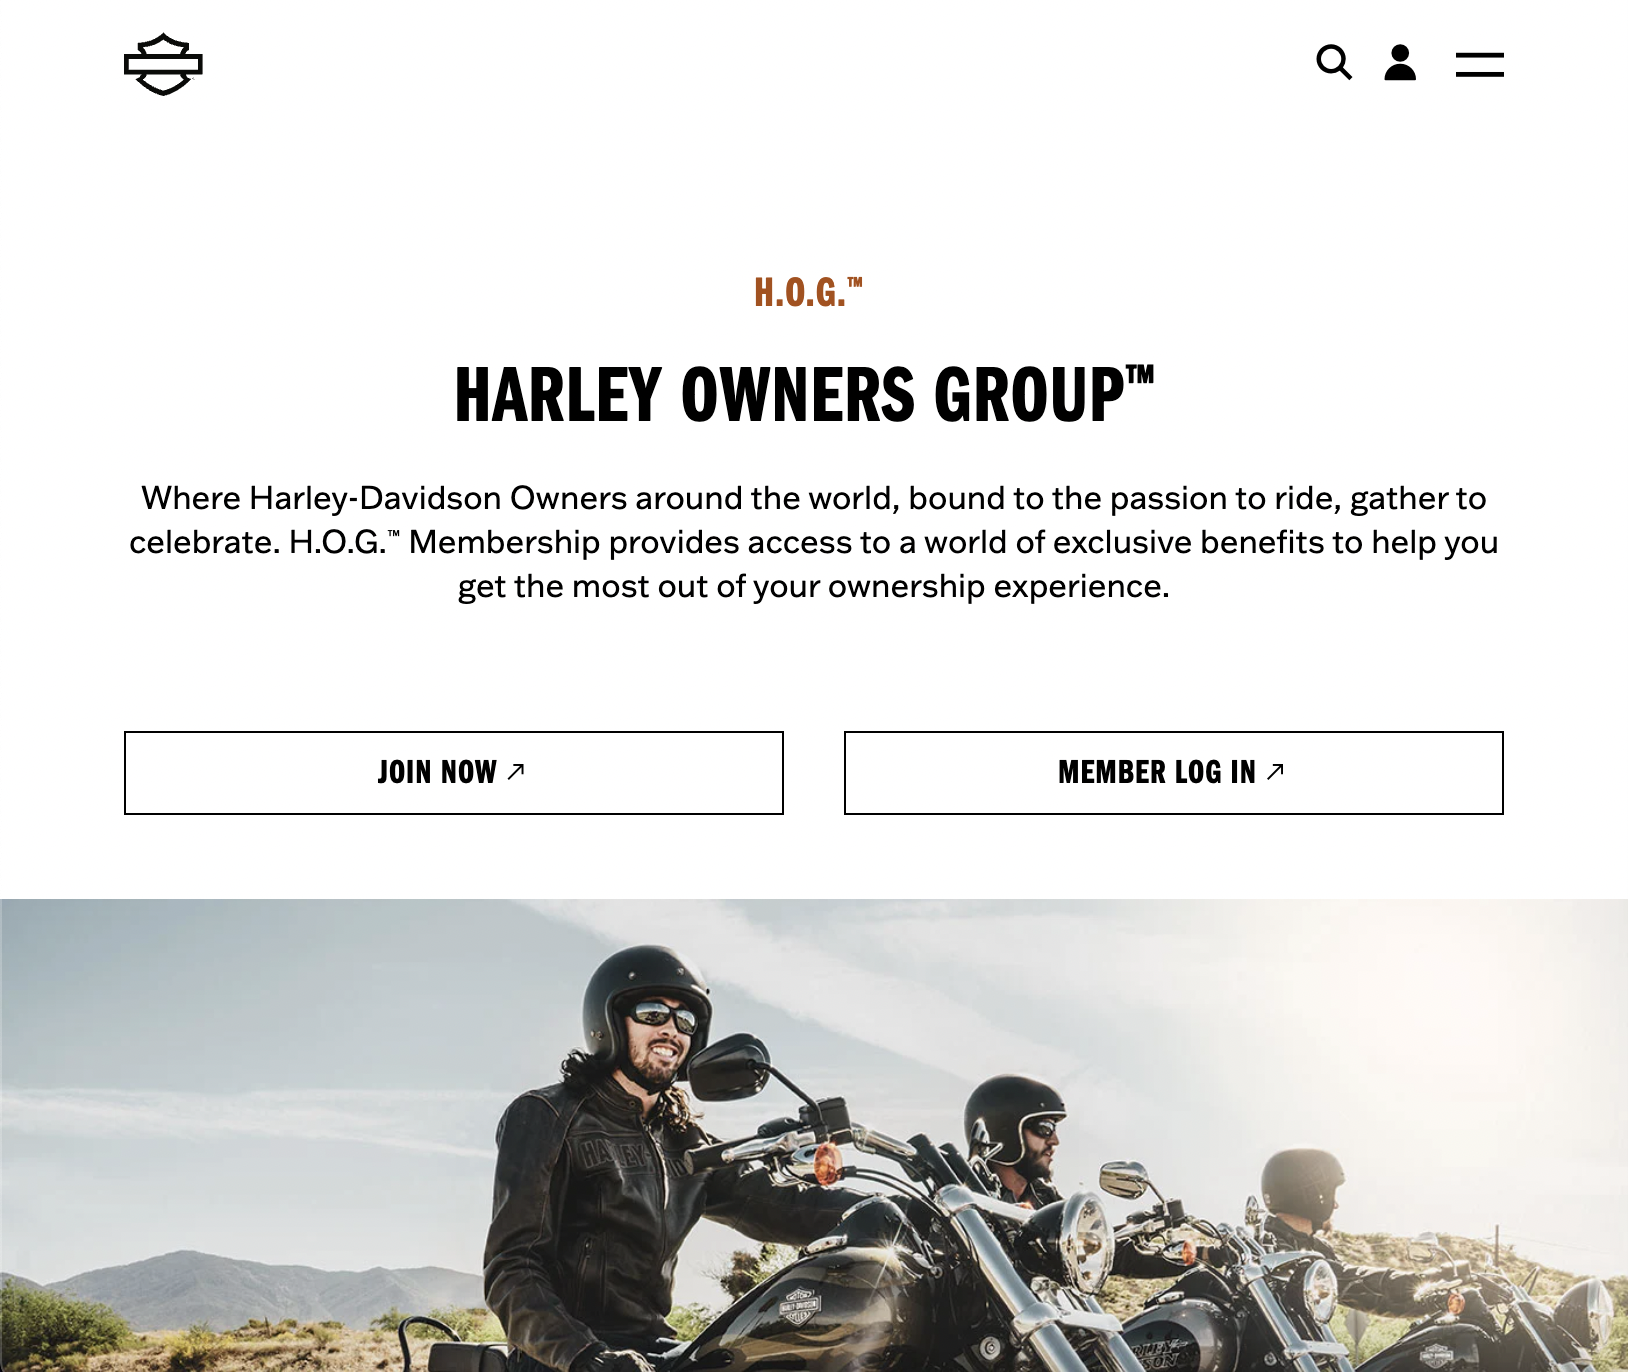 Harley Davidson’s H.O.G brand community page.